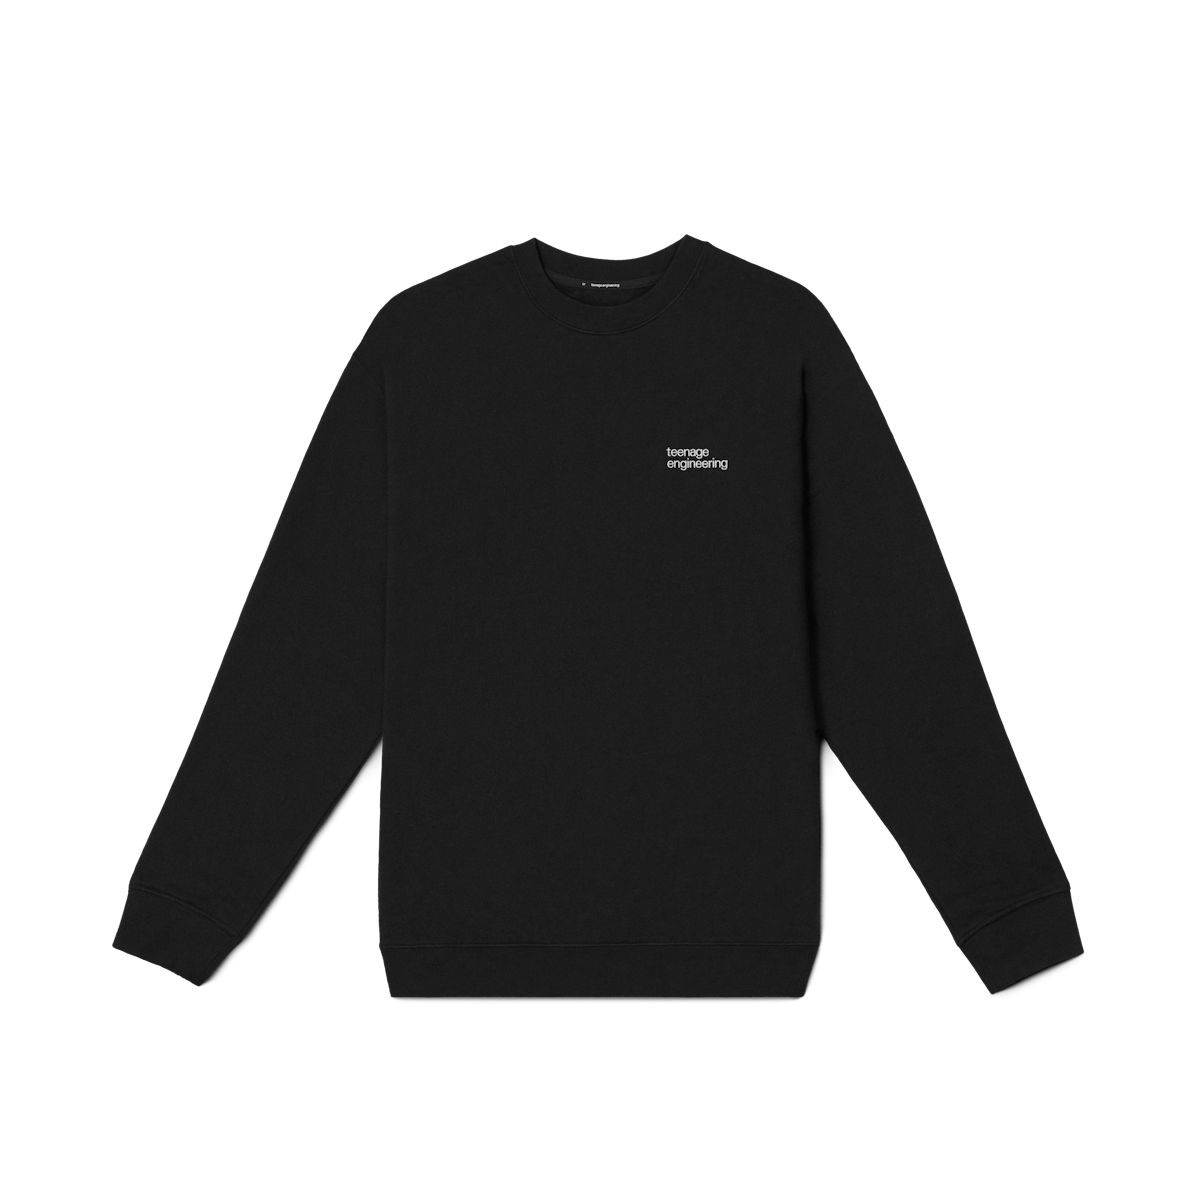 cotton sweatshirt - teenage engineering